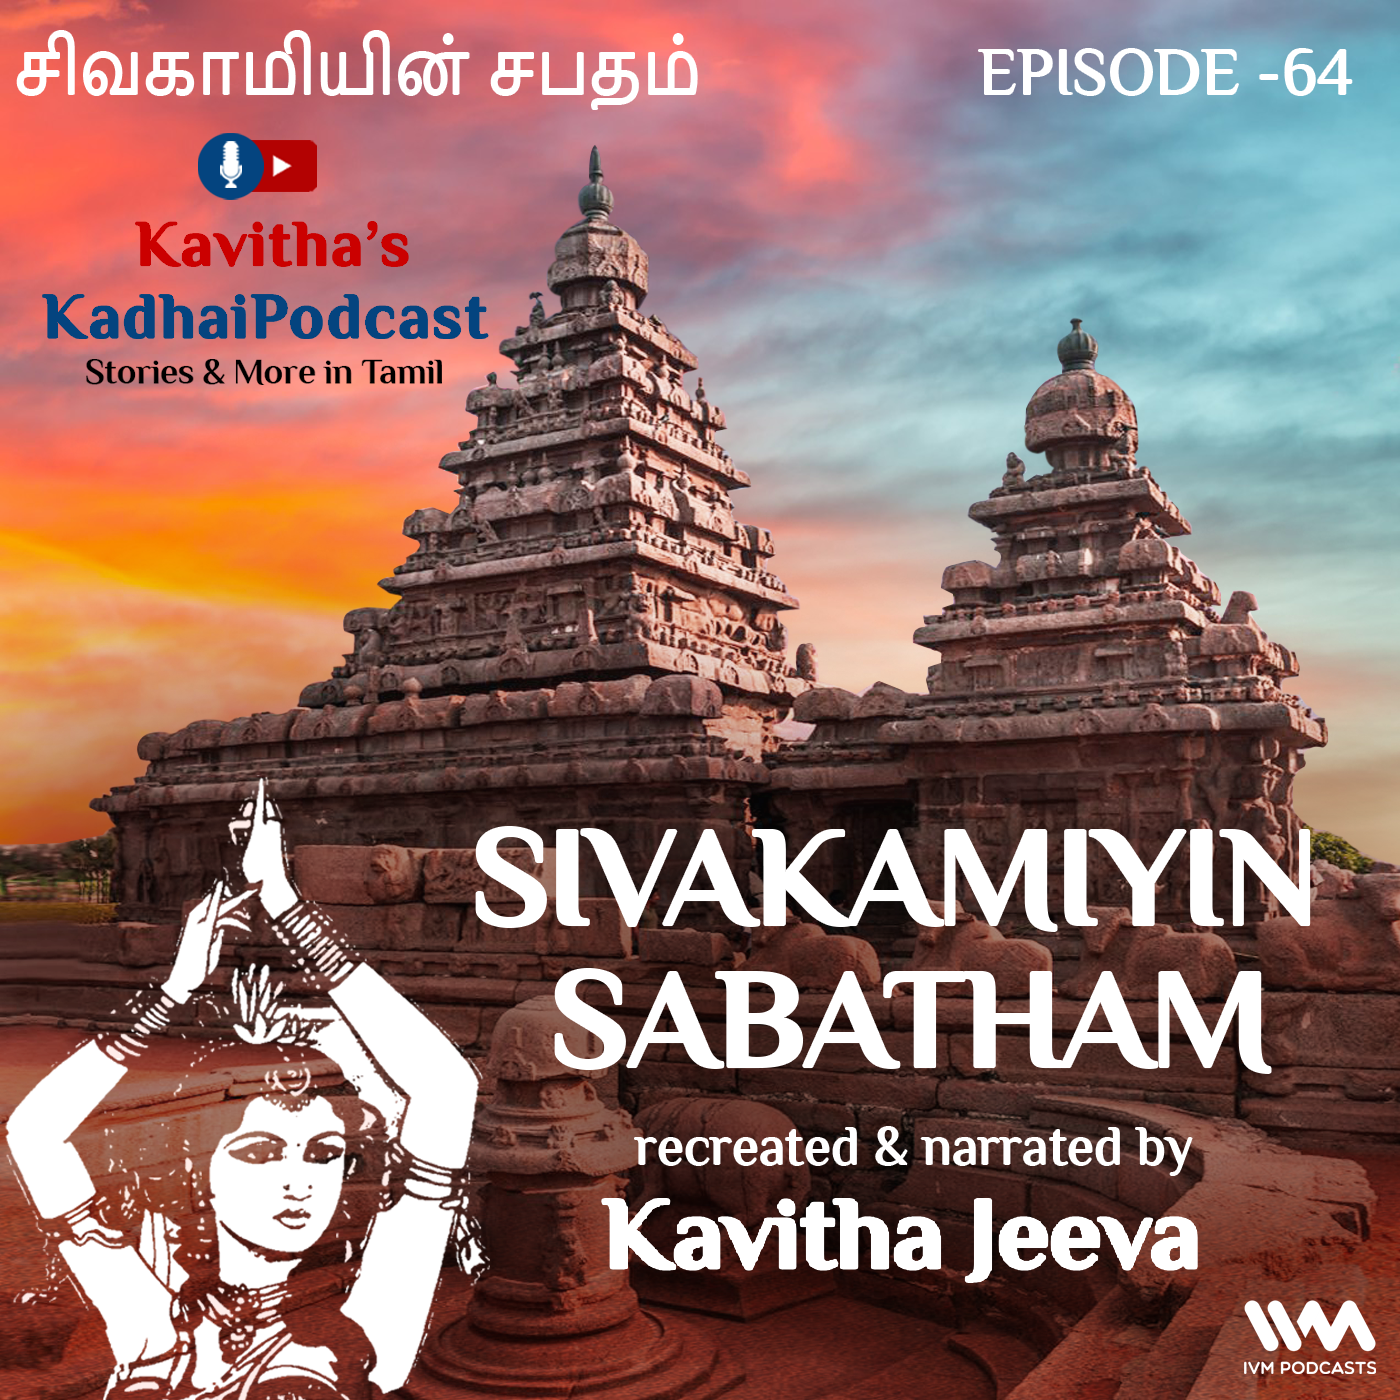 KadhaiPodcast’s Sivakamiyin Sabatham - Episode # 64